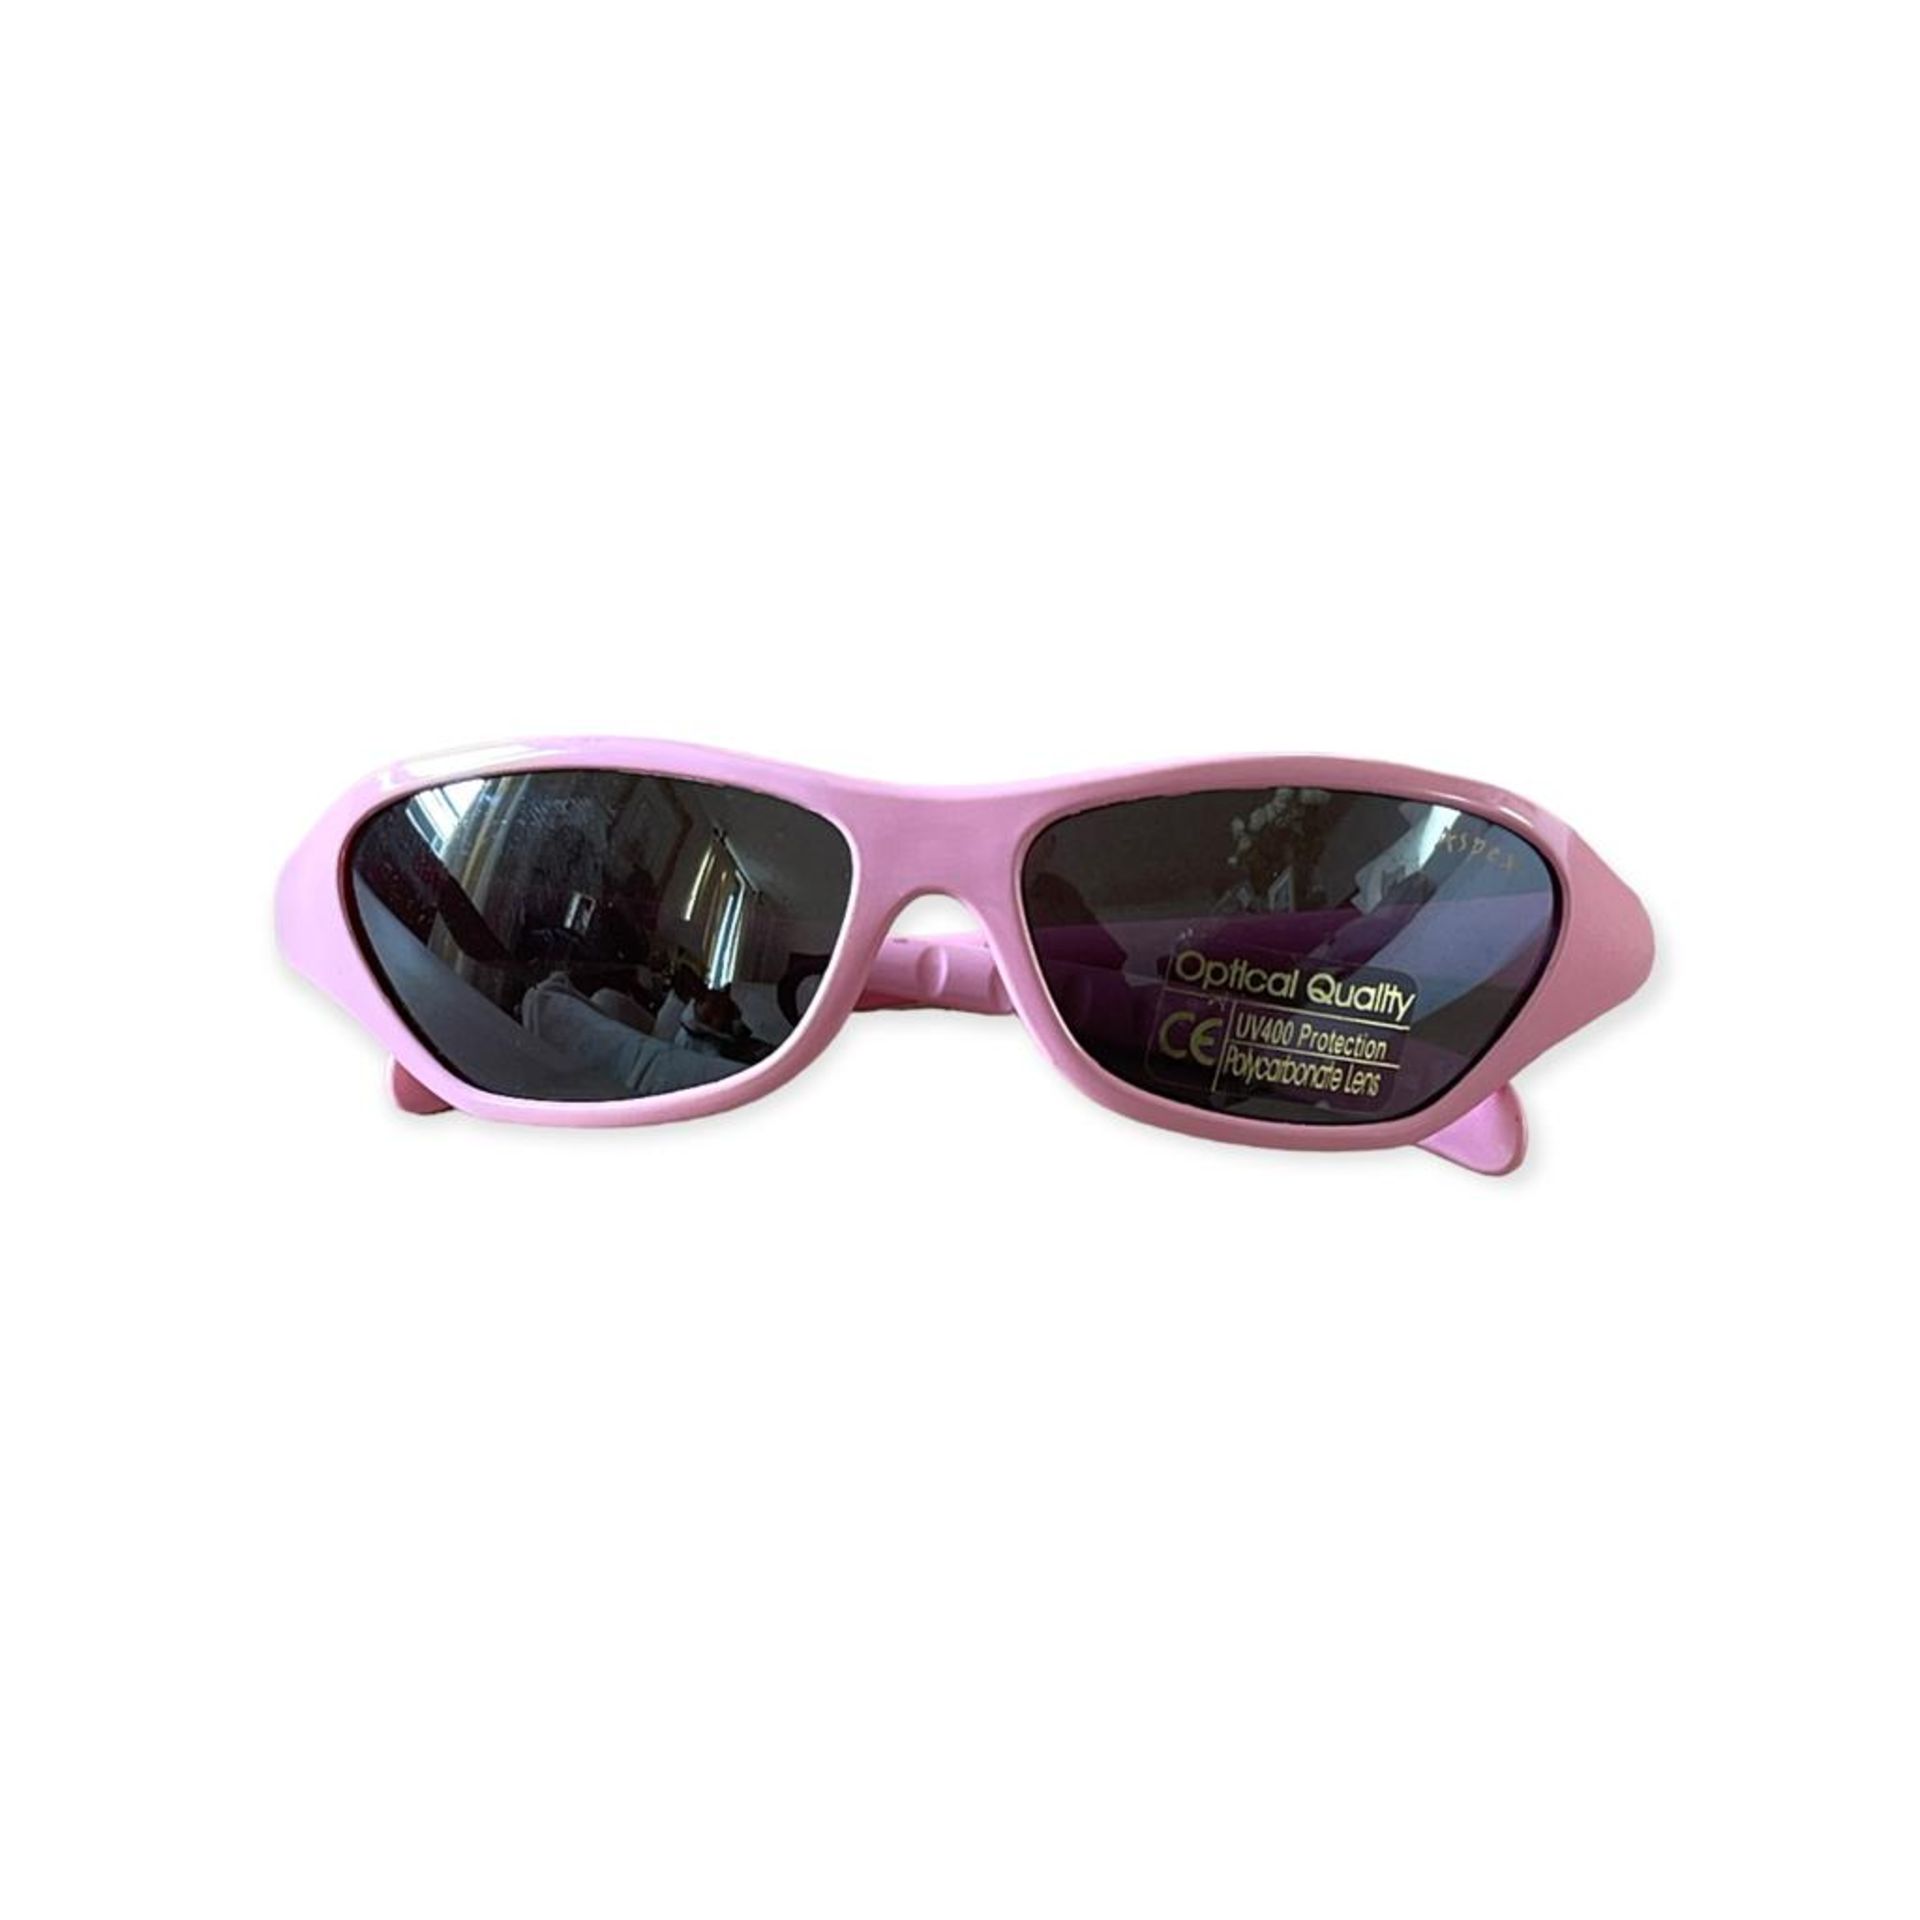 Aspex pink childrens sunglasses, Ex-Display - Image 2 of 4